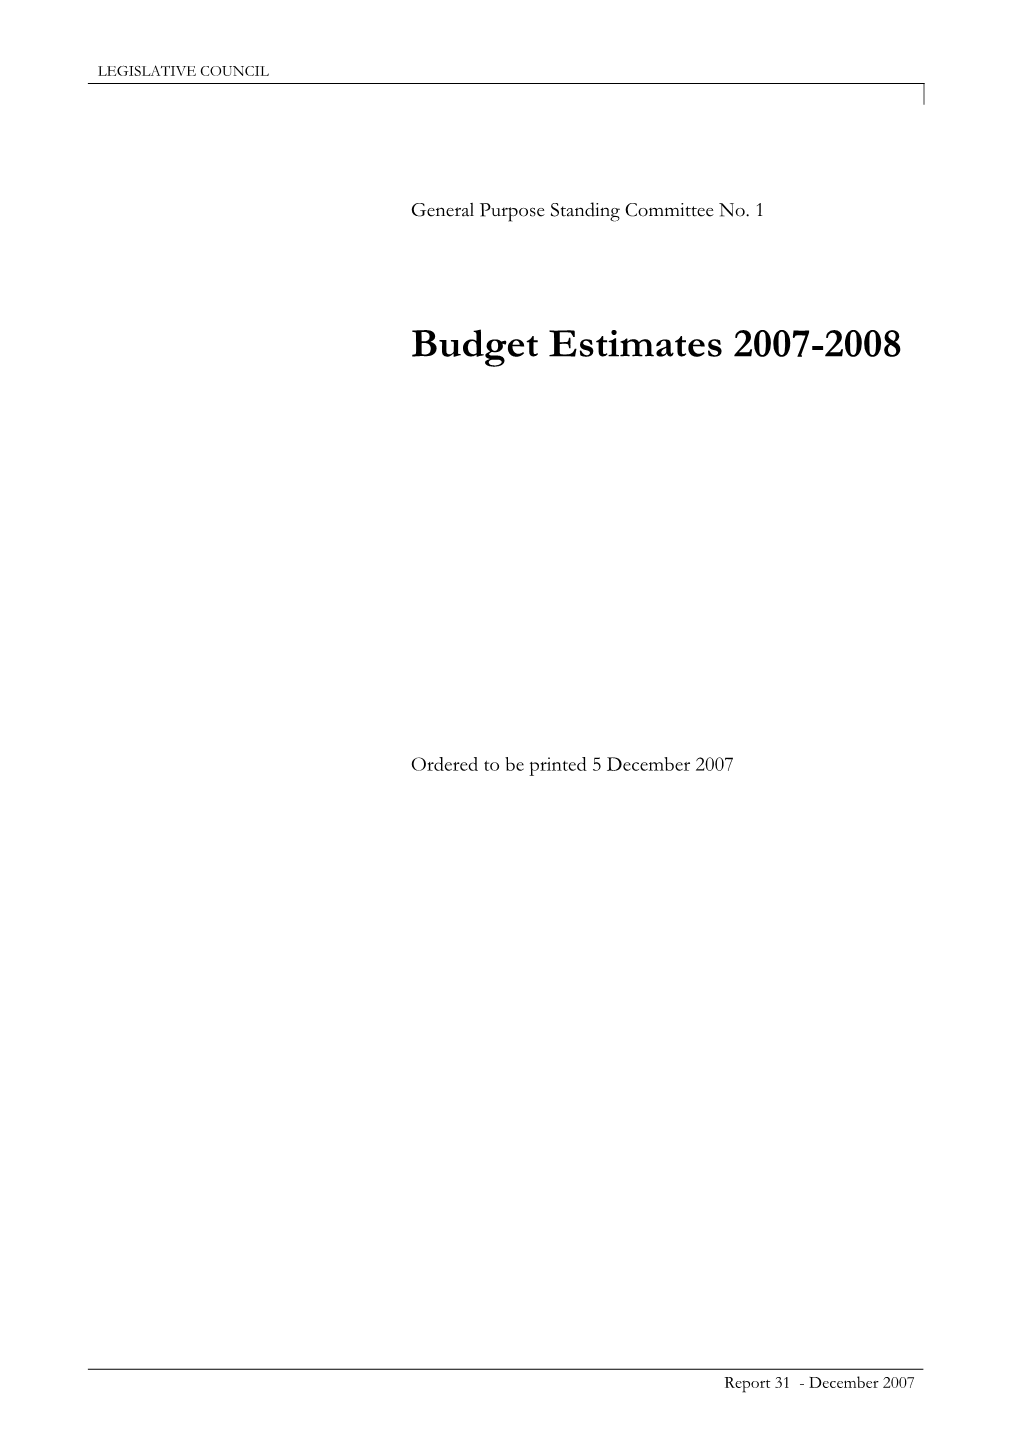 Budget Estimates 2007-2008